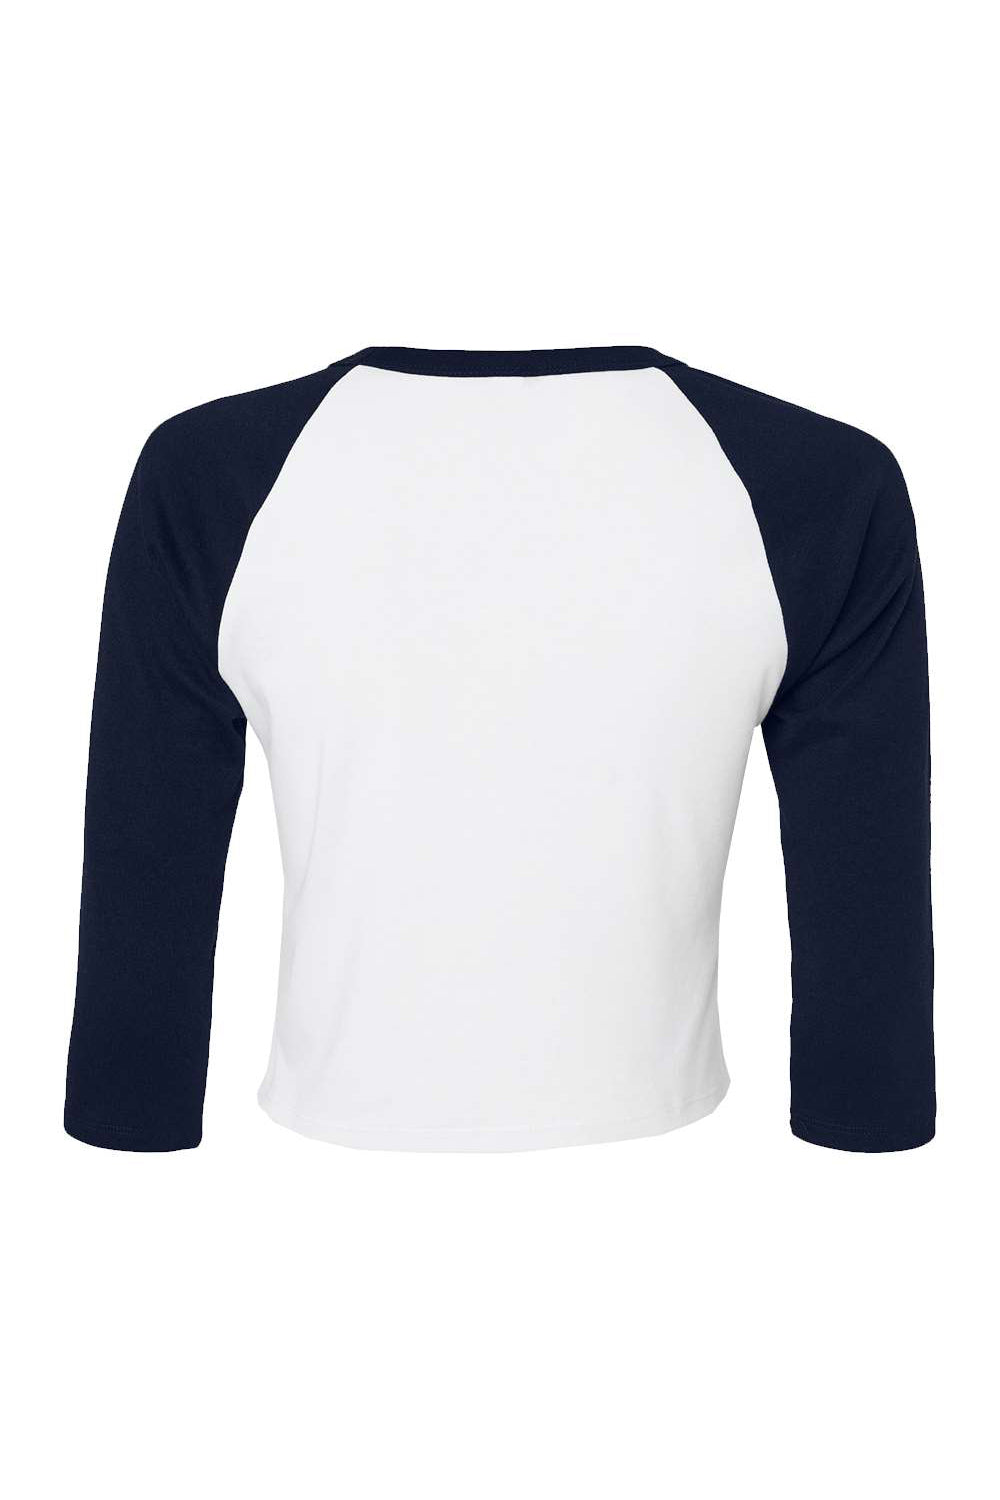 Bella + Canvas 1200 Womens Micro Ribbed Raglan 3/4 Sleeve Crewneck Baby T-Shirt White/Navy Blue Flat Back